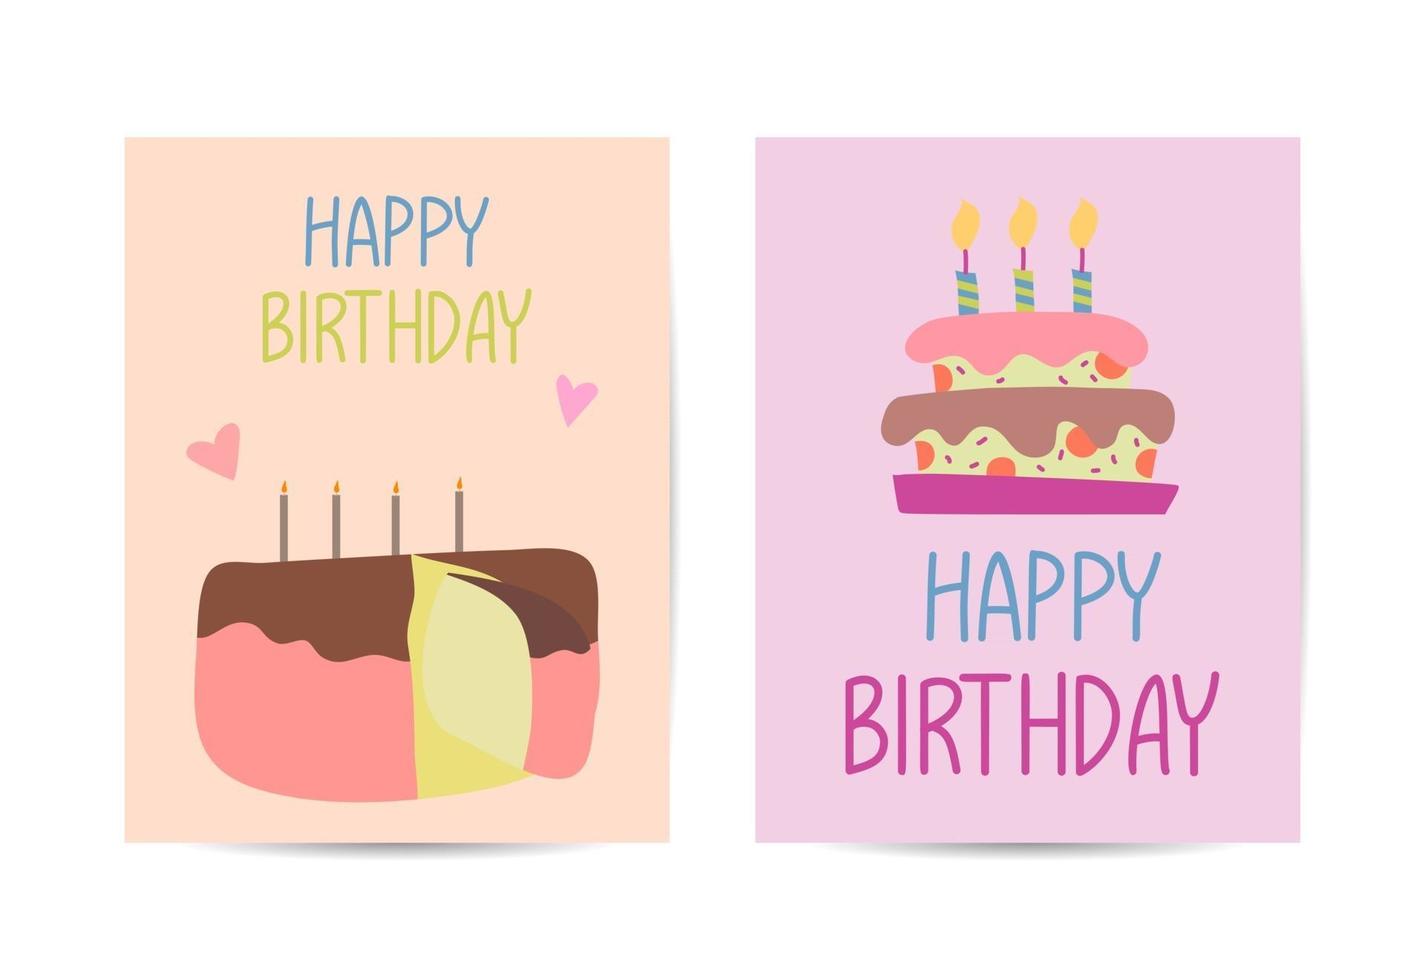 Birthday-related design templates